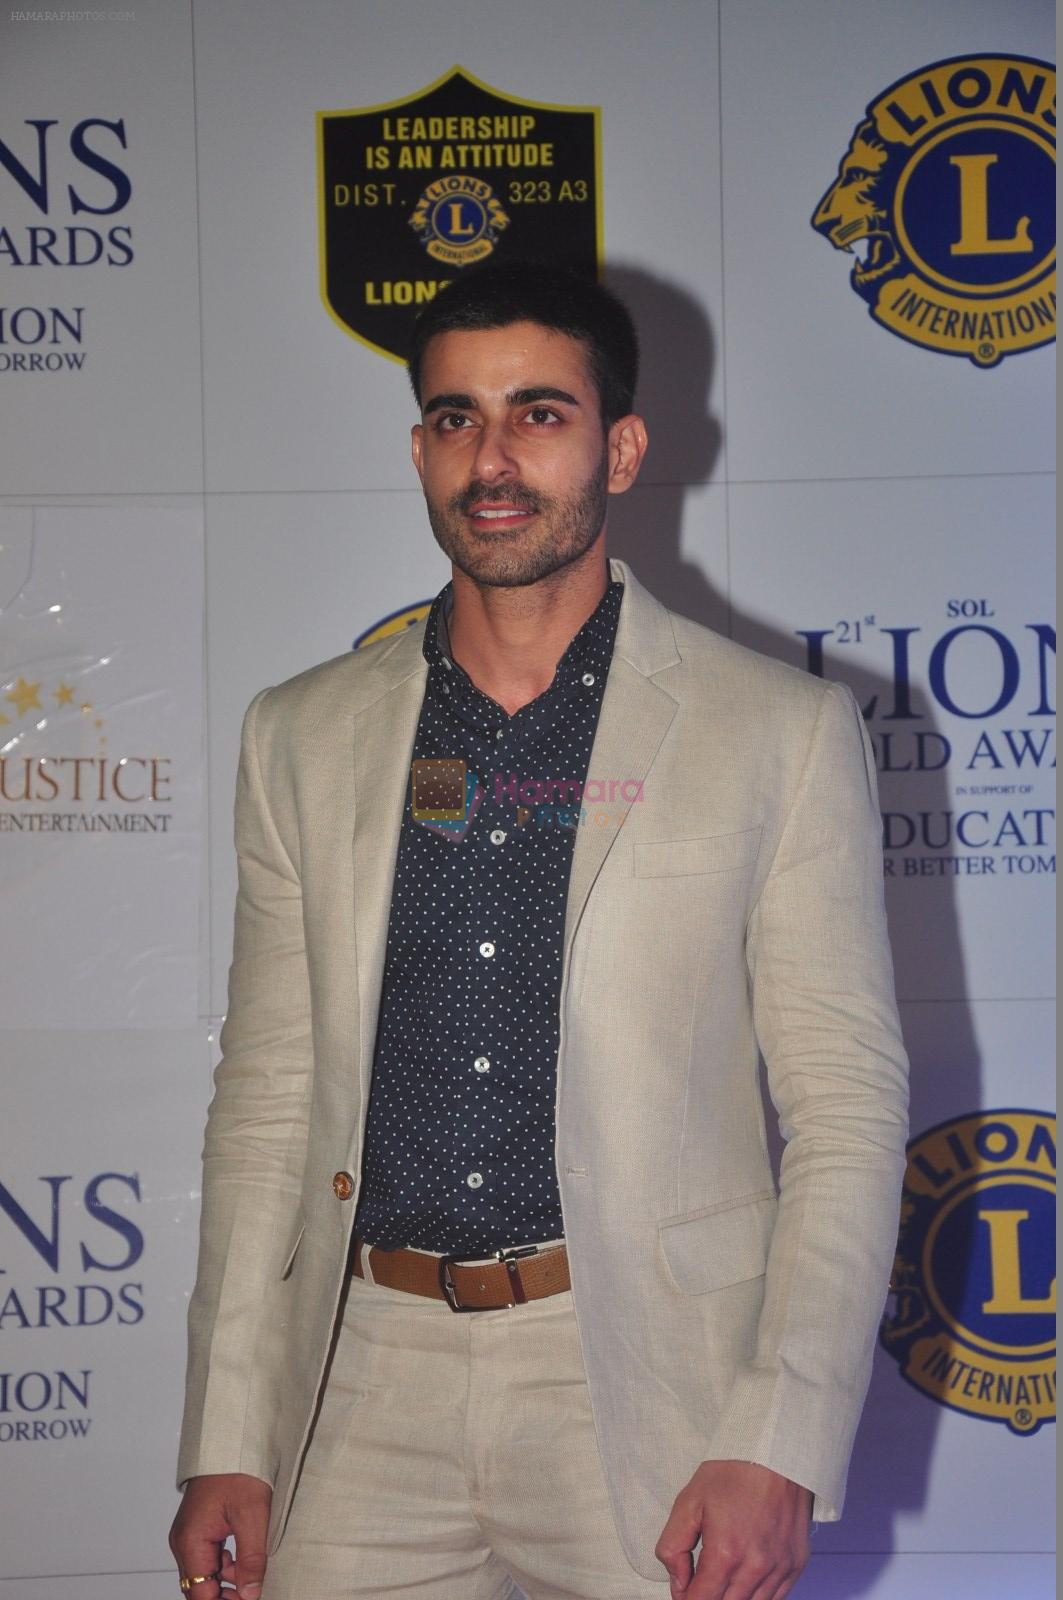 Gautam Rode at the 21st Lions Gold Awards 2015 in Mumbai on 6th Jan 2015